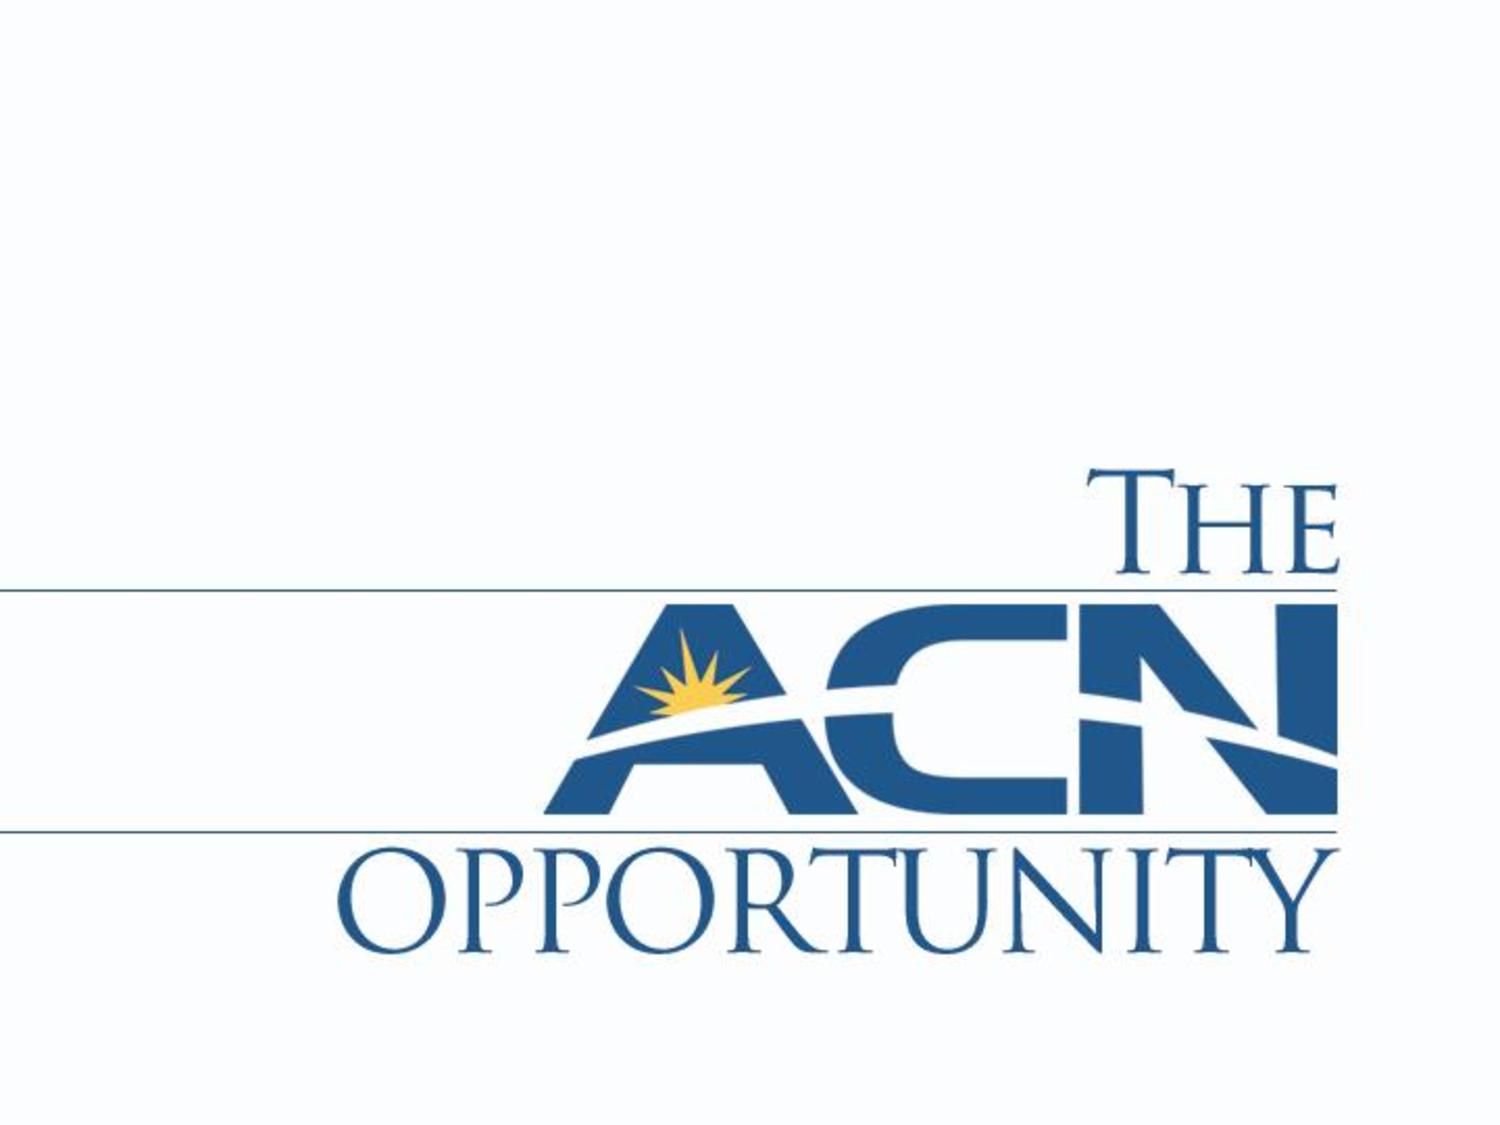 Acn Logo PNG-PlusPNG.com-2220